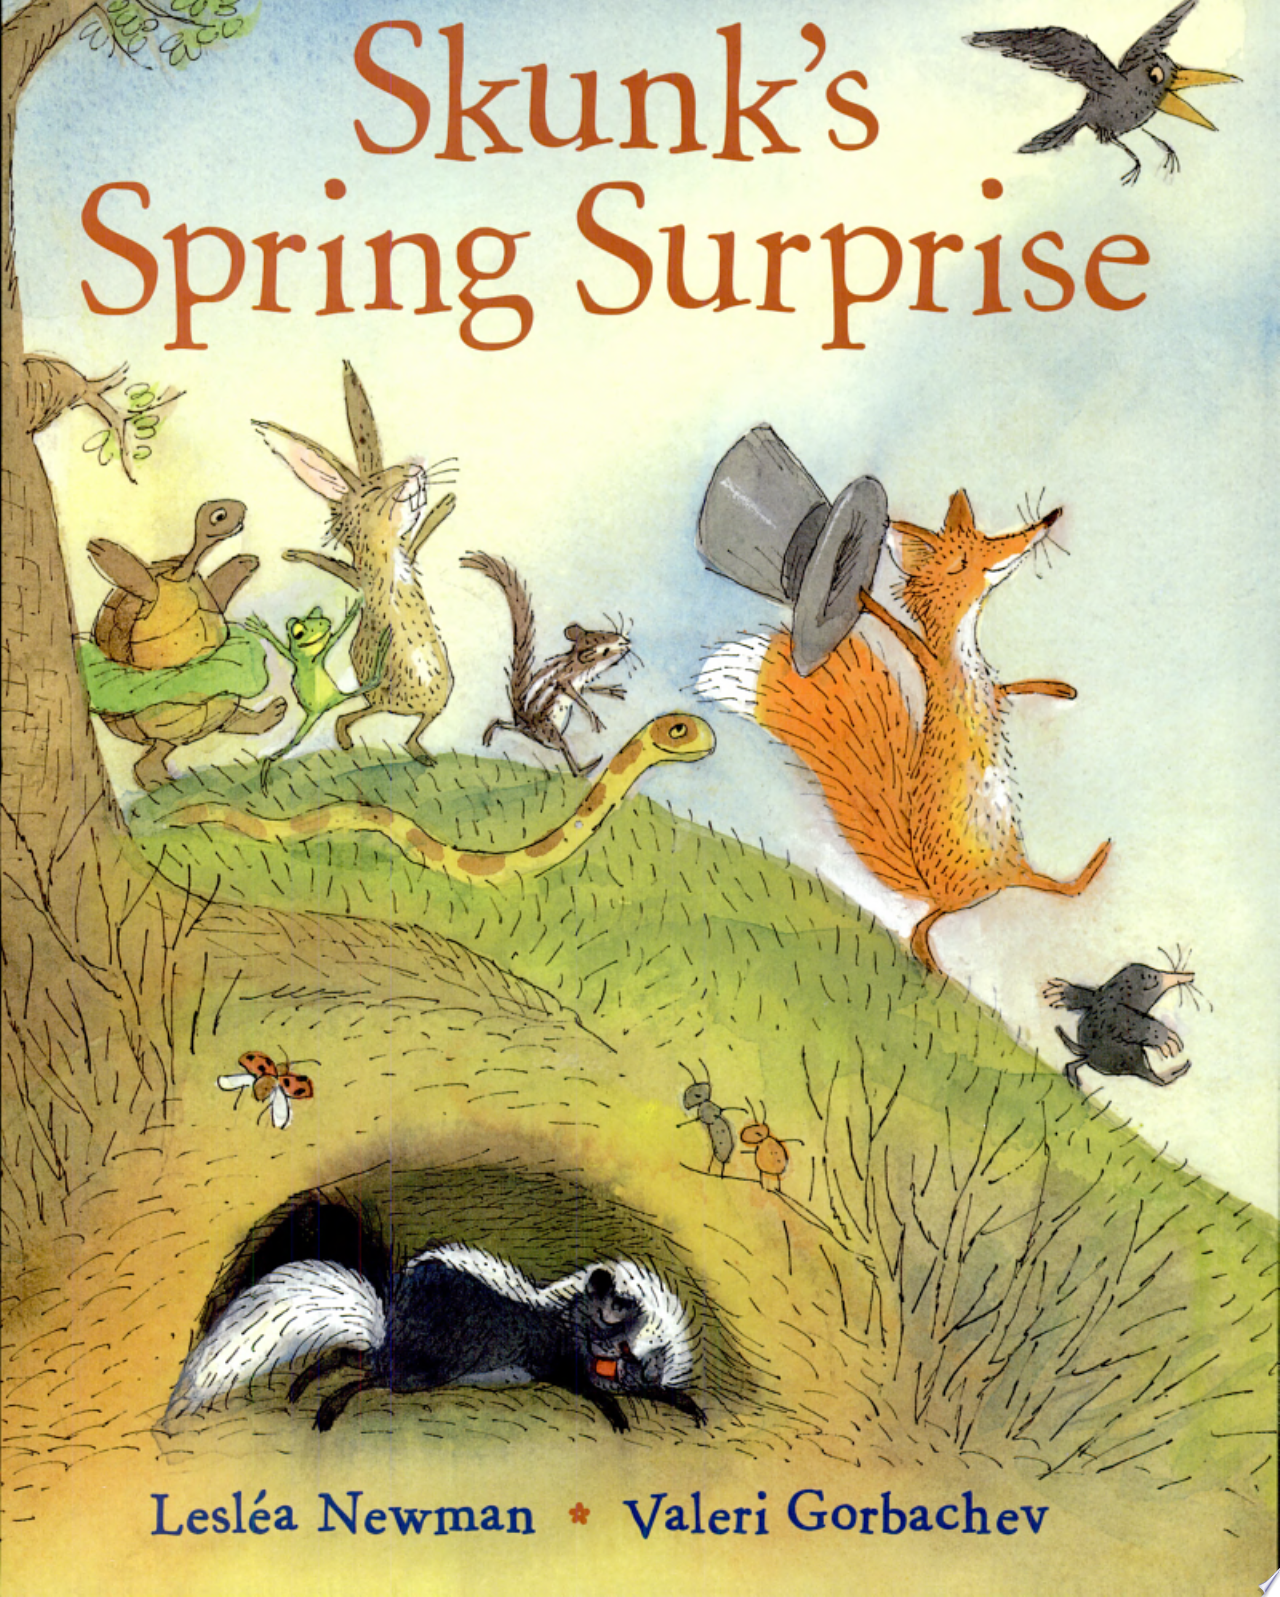 Image for "Skunk's Spring Surprise"